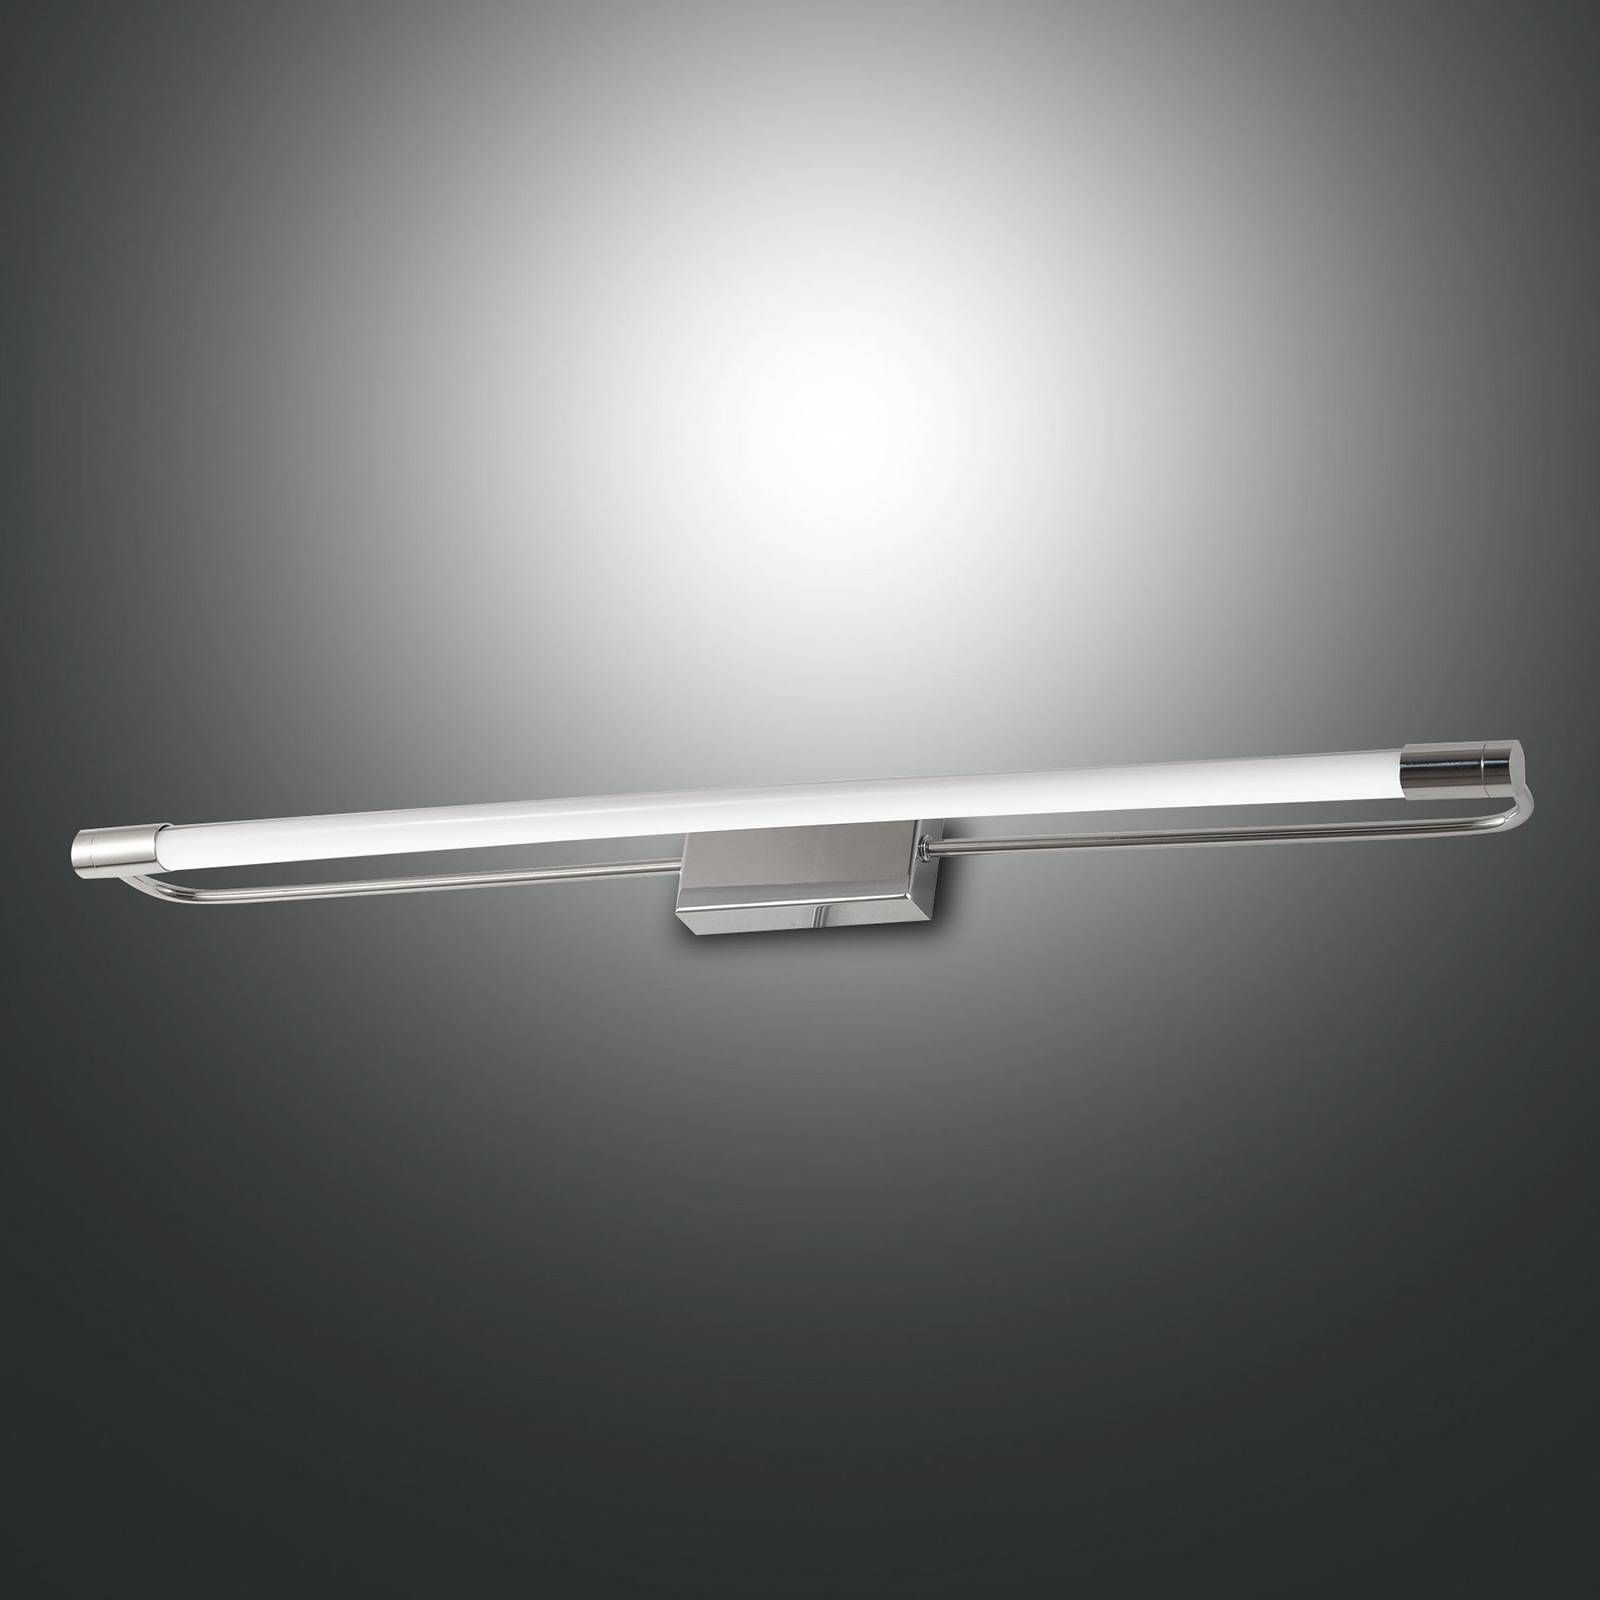 Fabas Luce Nástenné LED svietidlo Rapallo chróm IP44 60 cm, Chodba, kov, metakrylan, 20W, L: 60 cm, K: 5cm